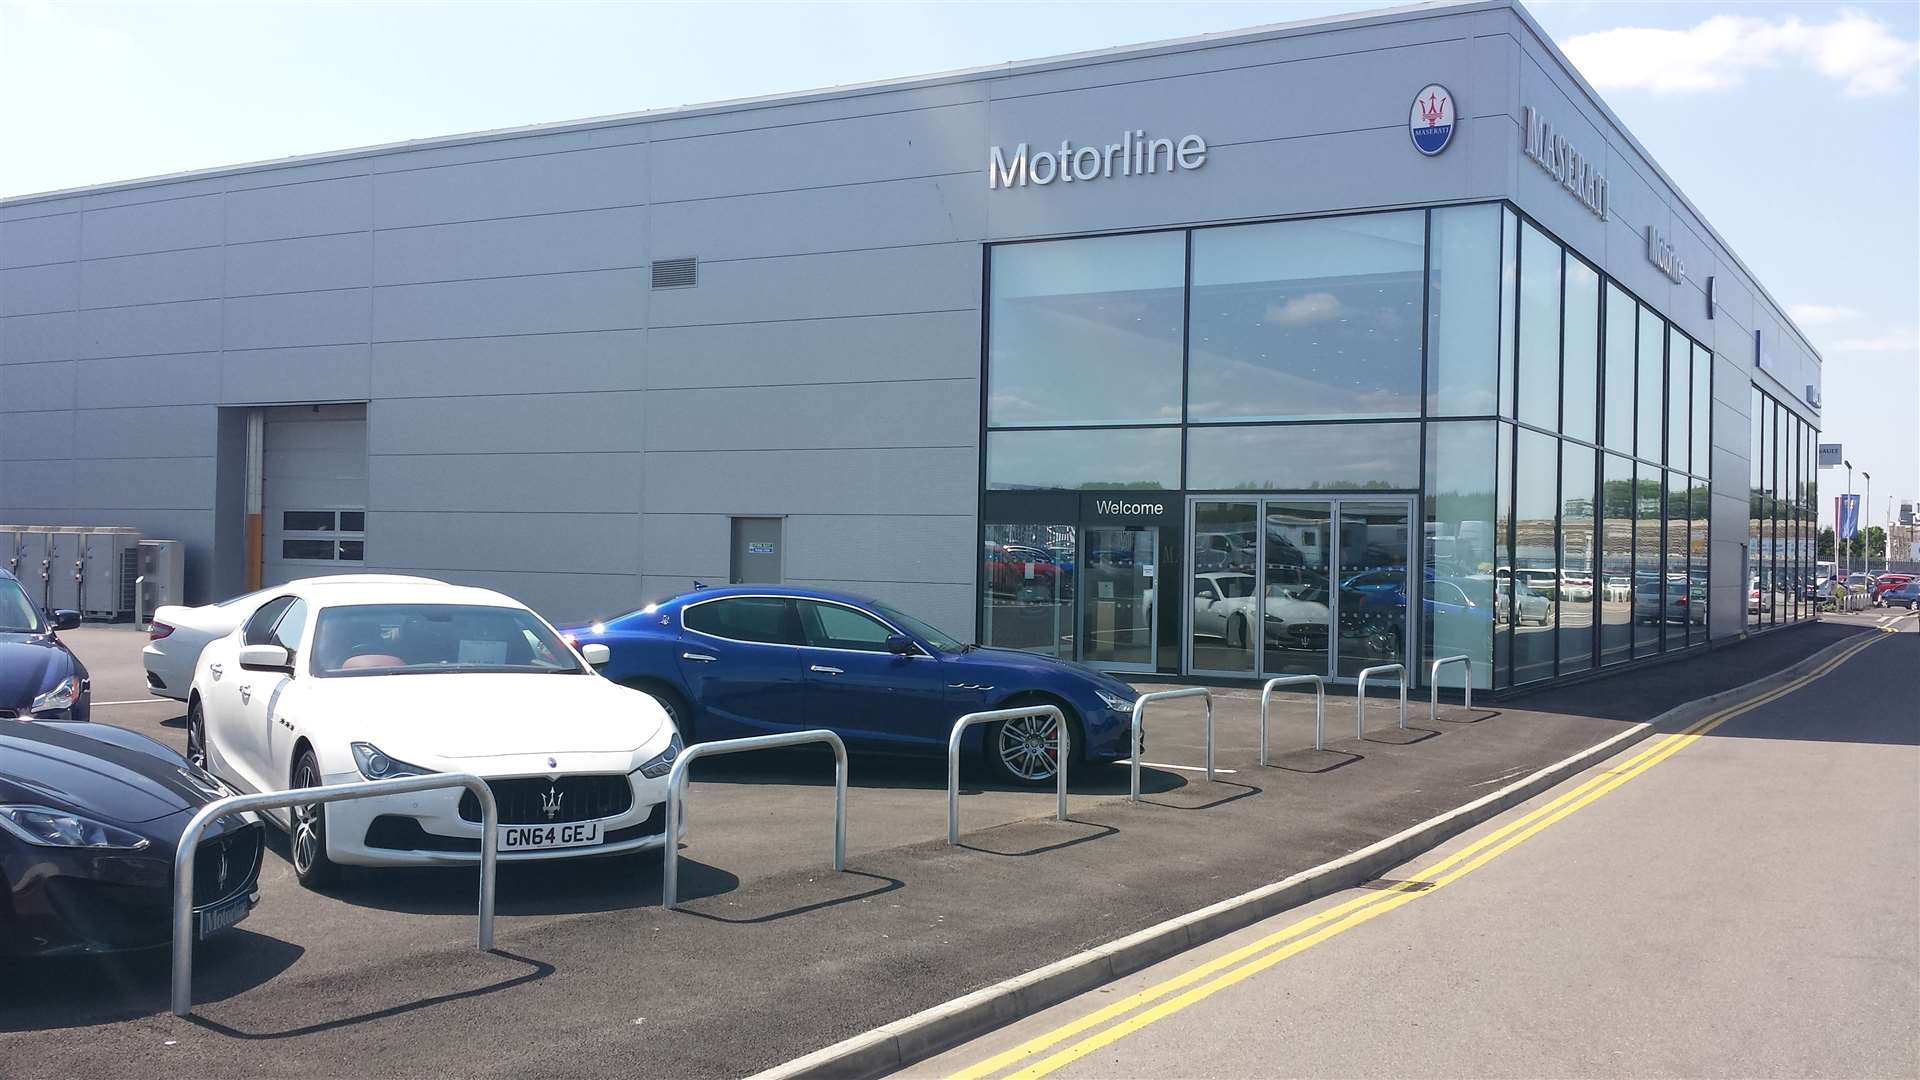 The new Motorline Maserati dealership in Maidstone